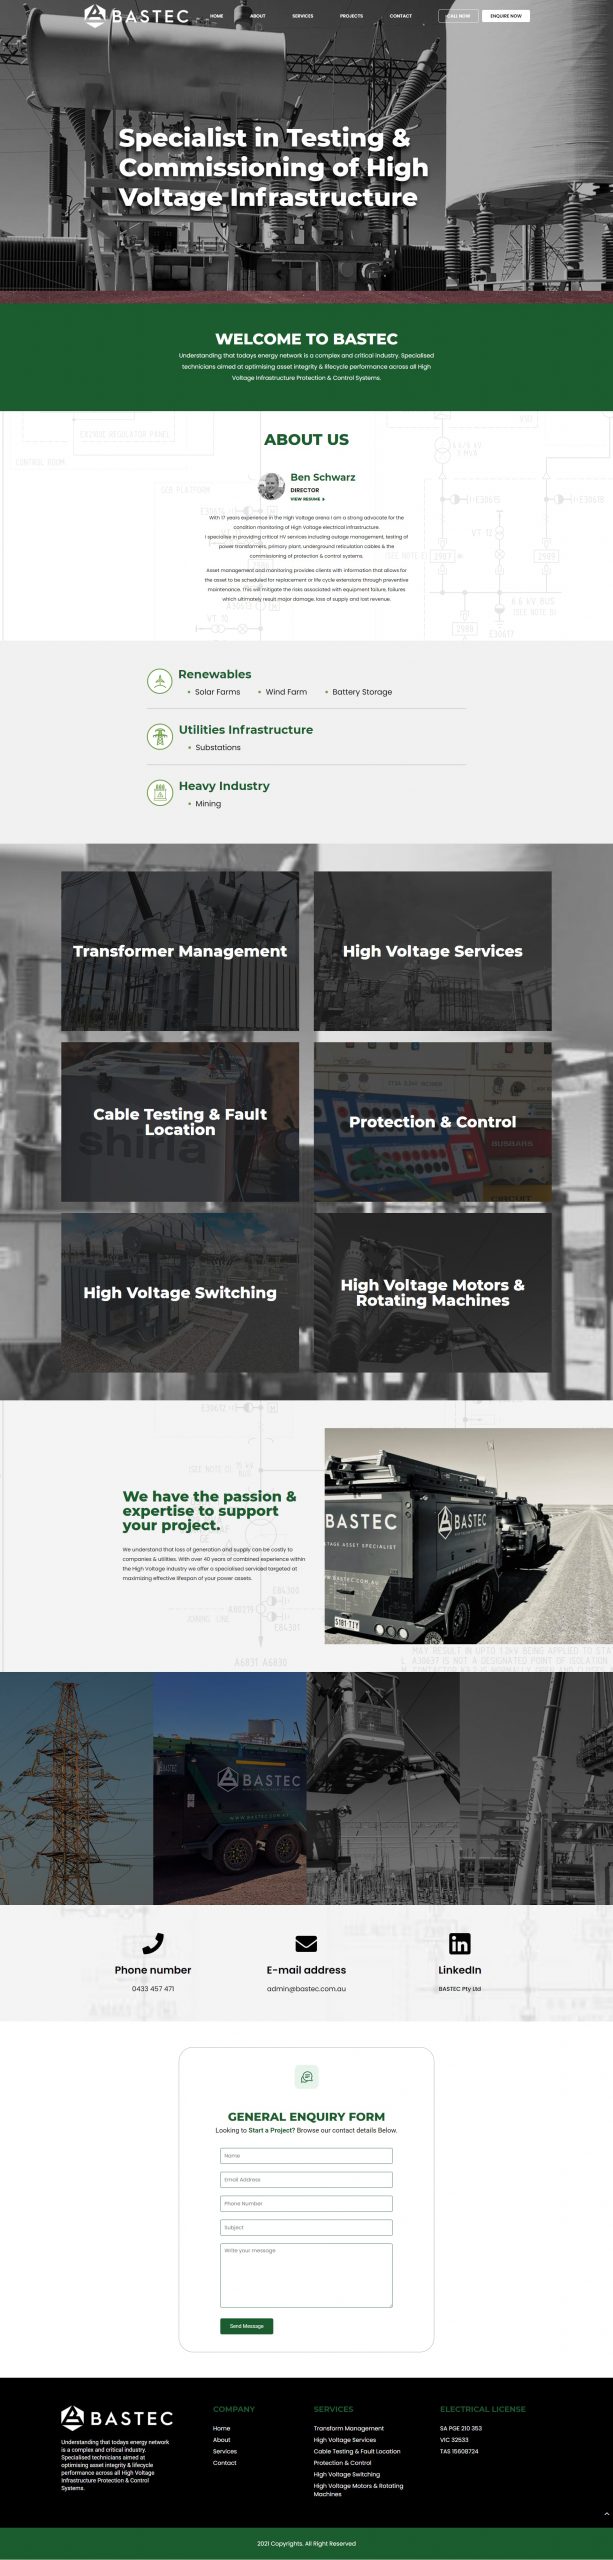 Bastec Homepage